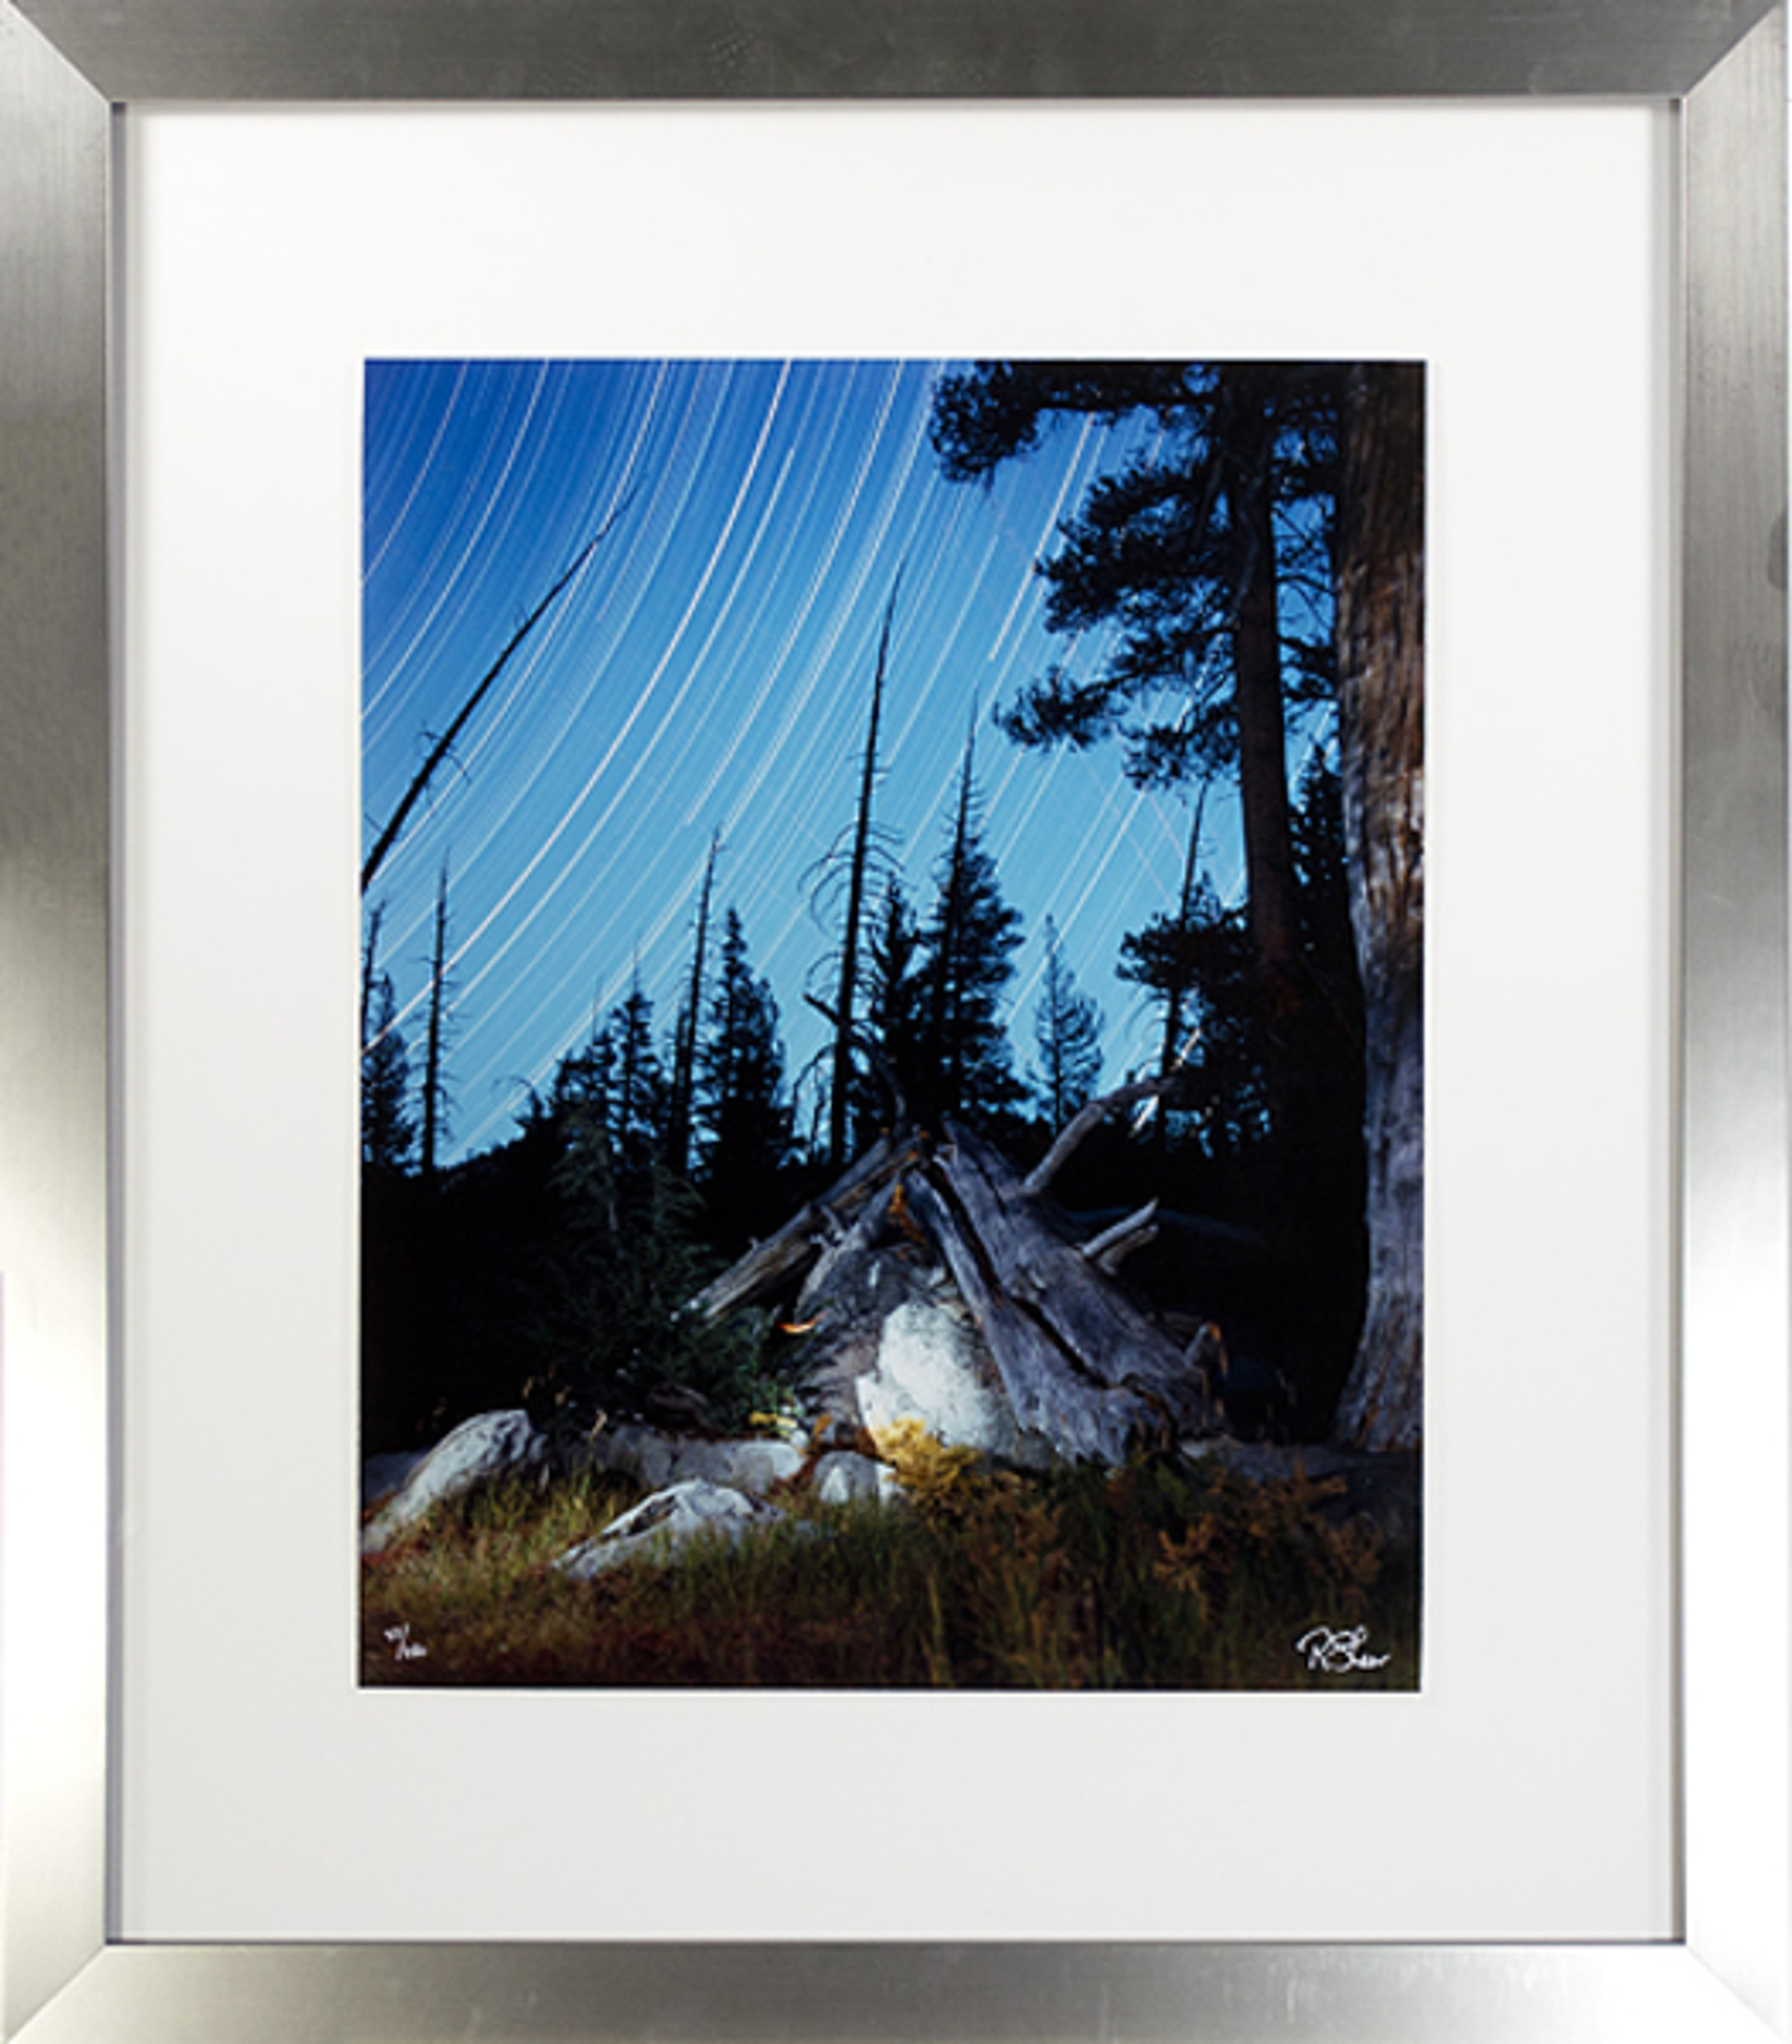 The Spirit of John Muir with Star Trails,Yosemite by Robert Kawika Sheer